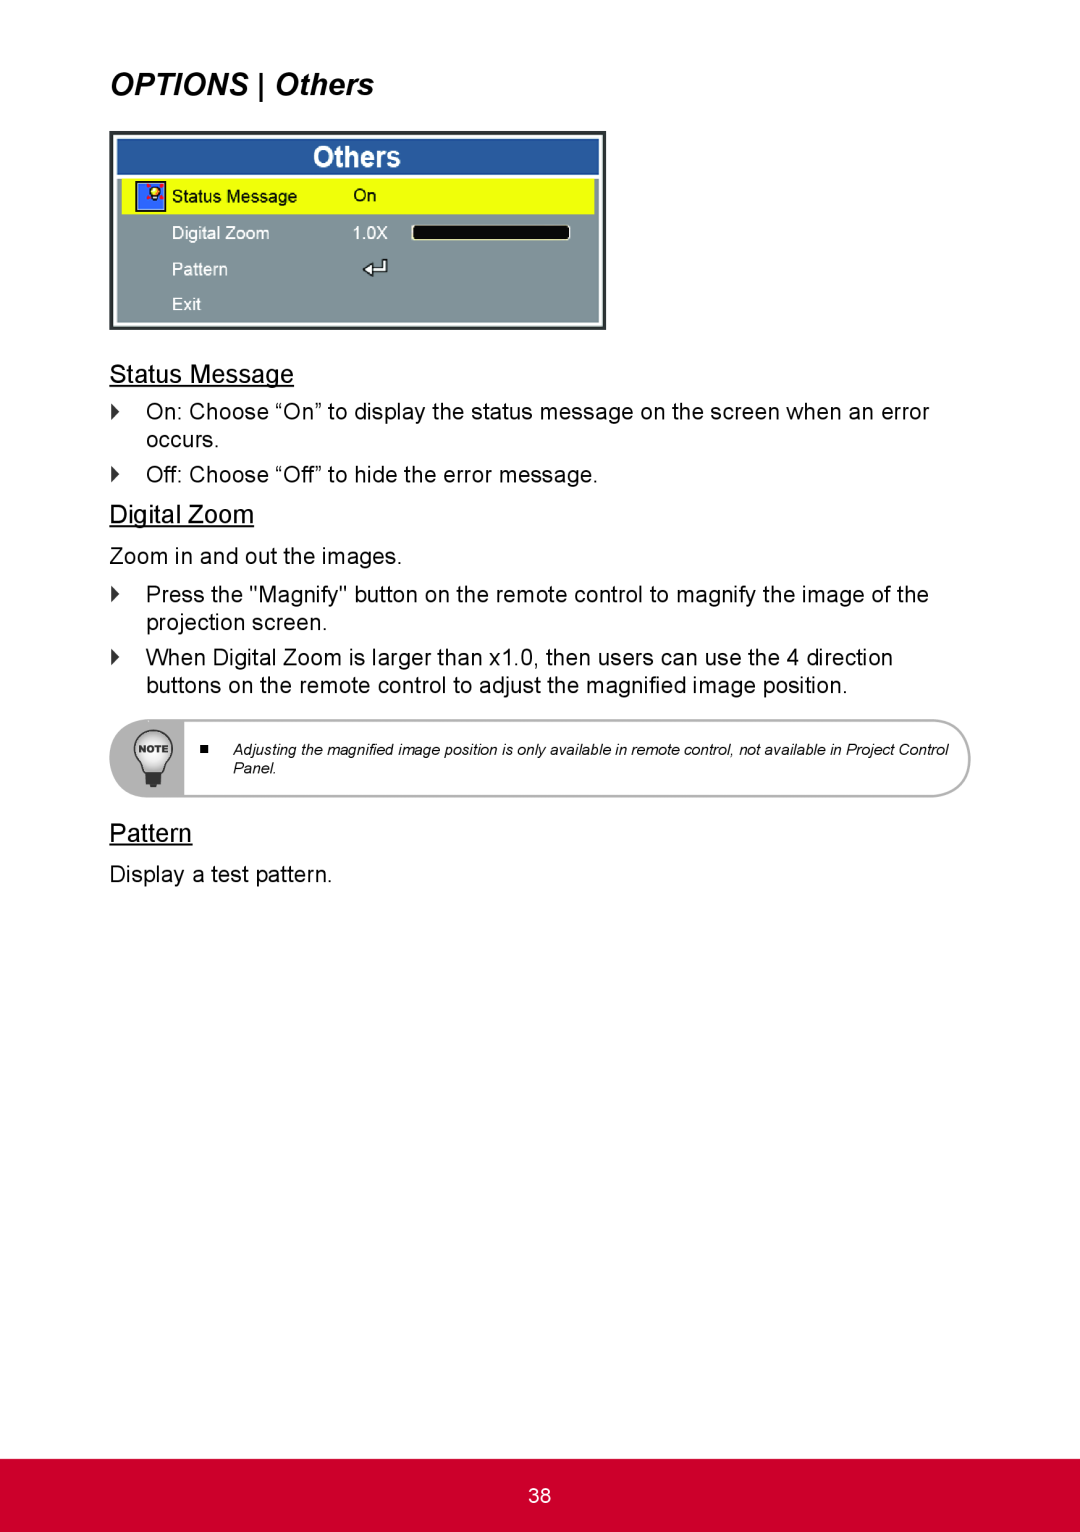 ViewSonic PRO9000 warranty OPTIONS Others, Status Message, Digital Zoom, Pattern 